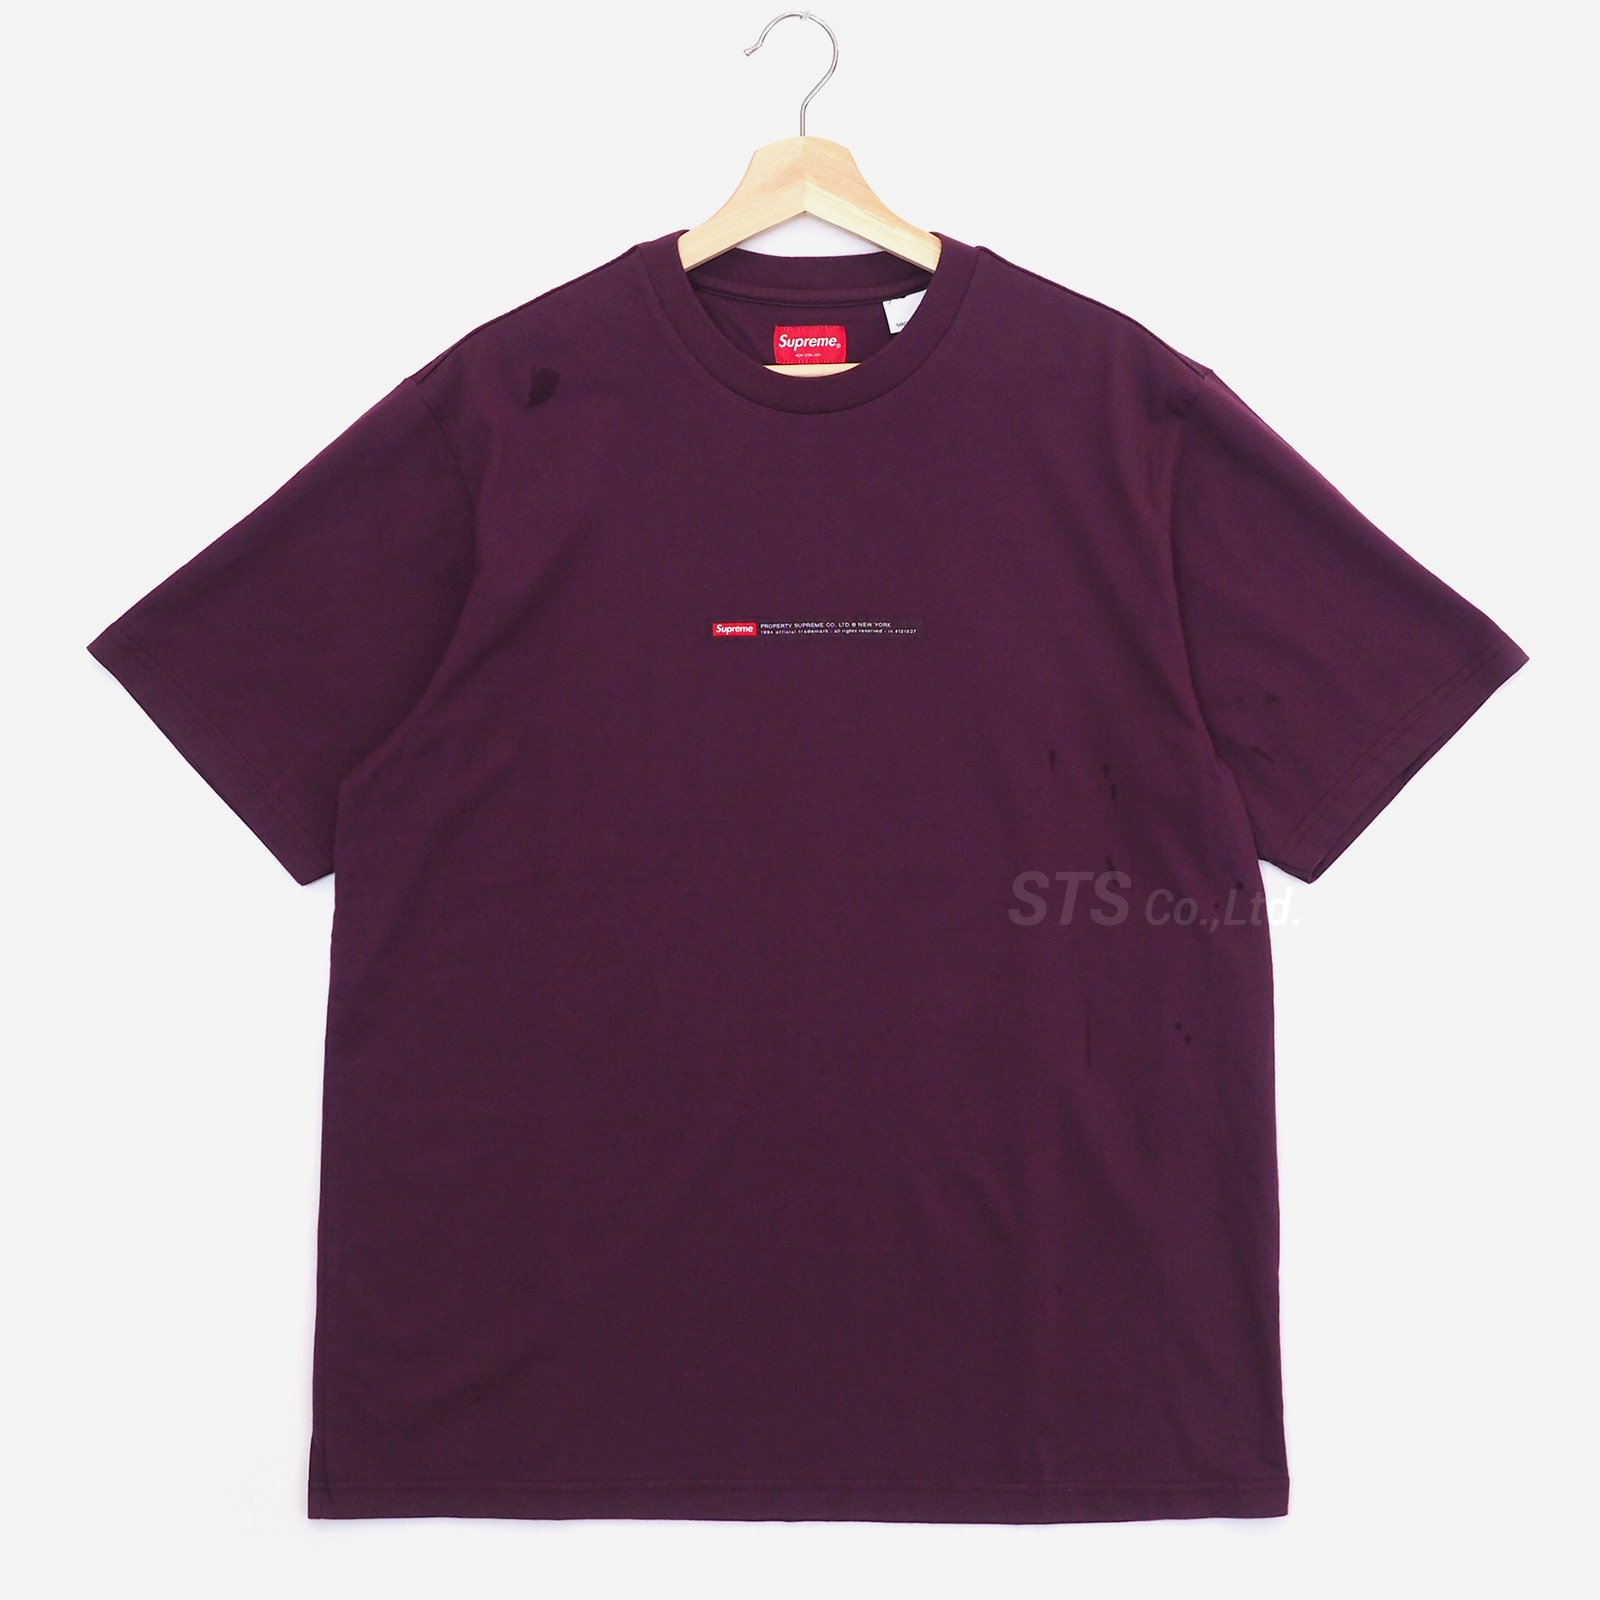 XL Supreme Property Label S/S Top Tシャツ